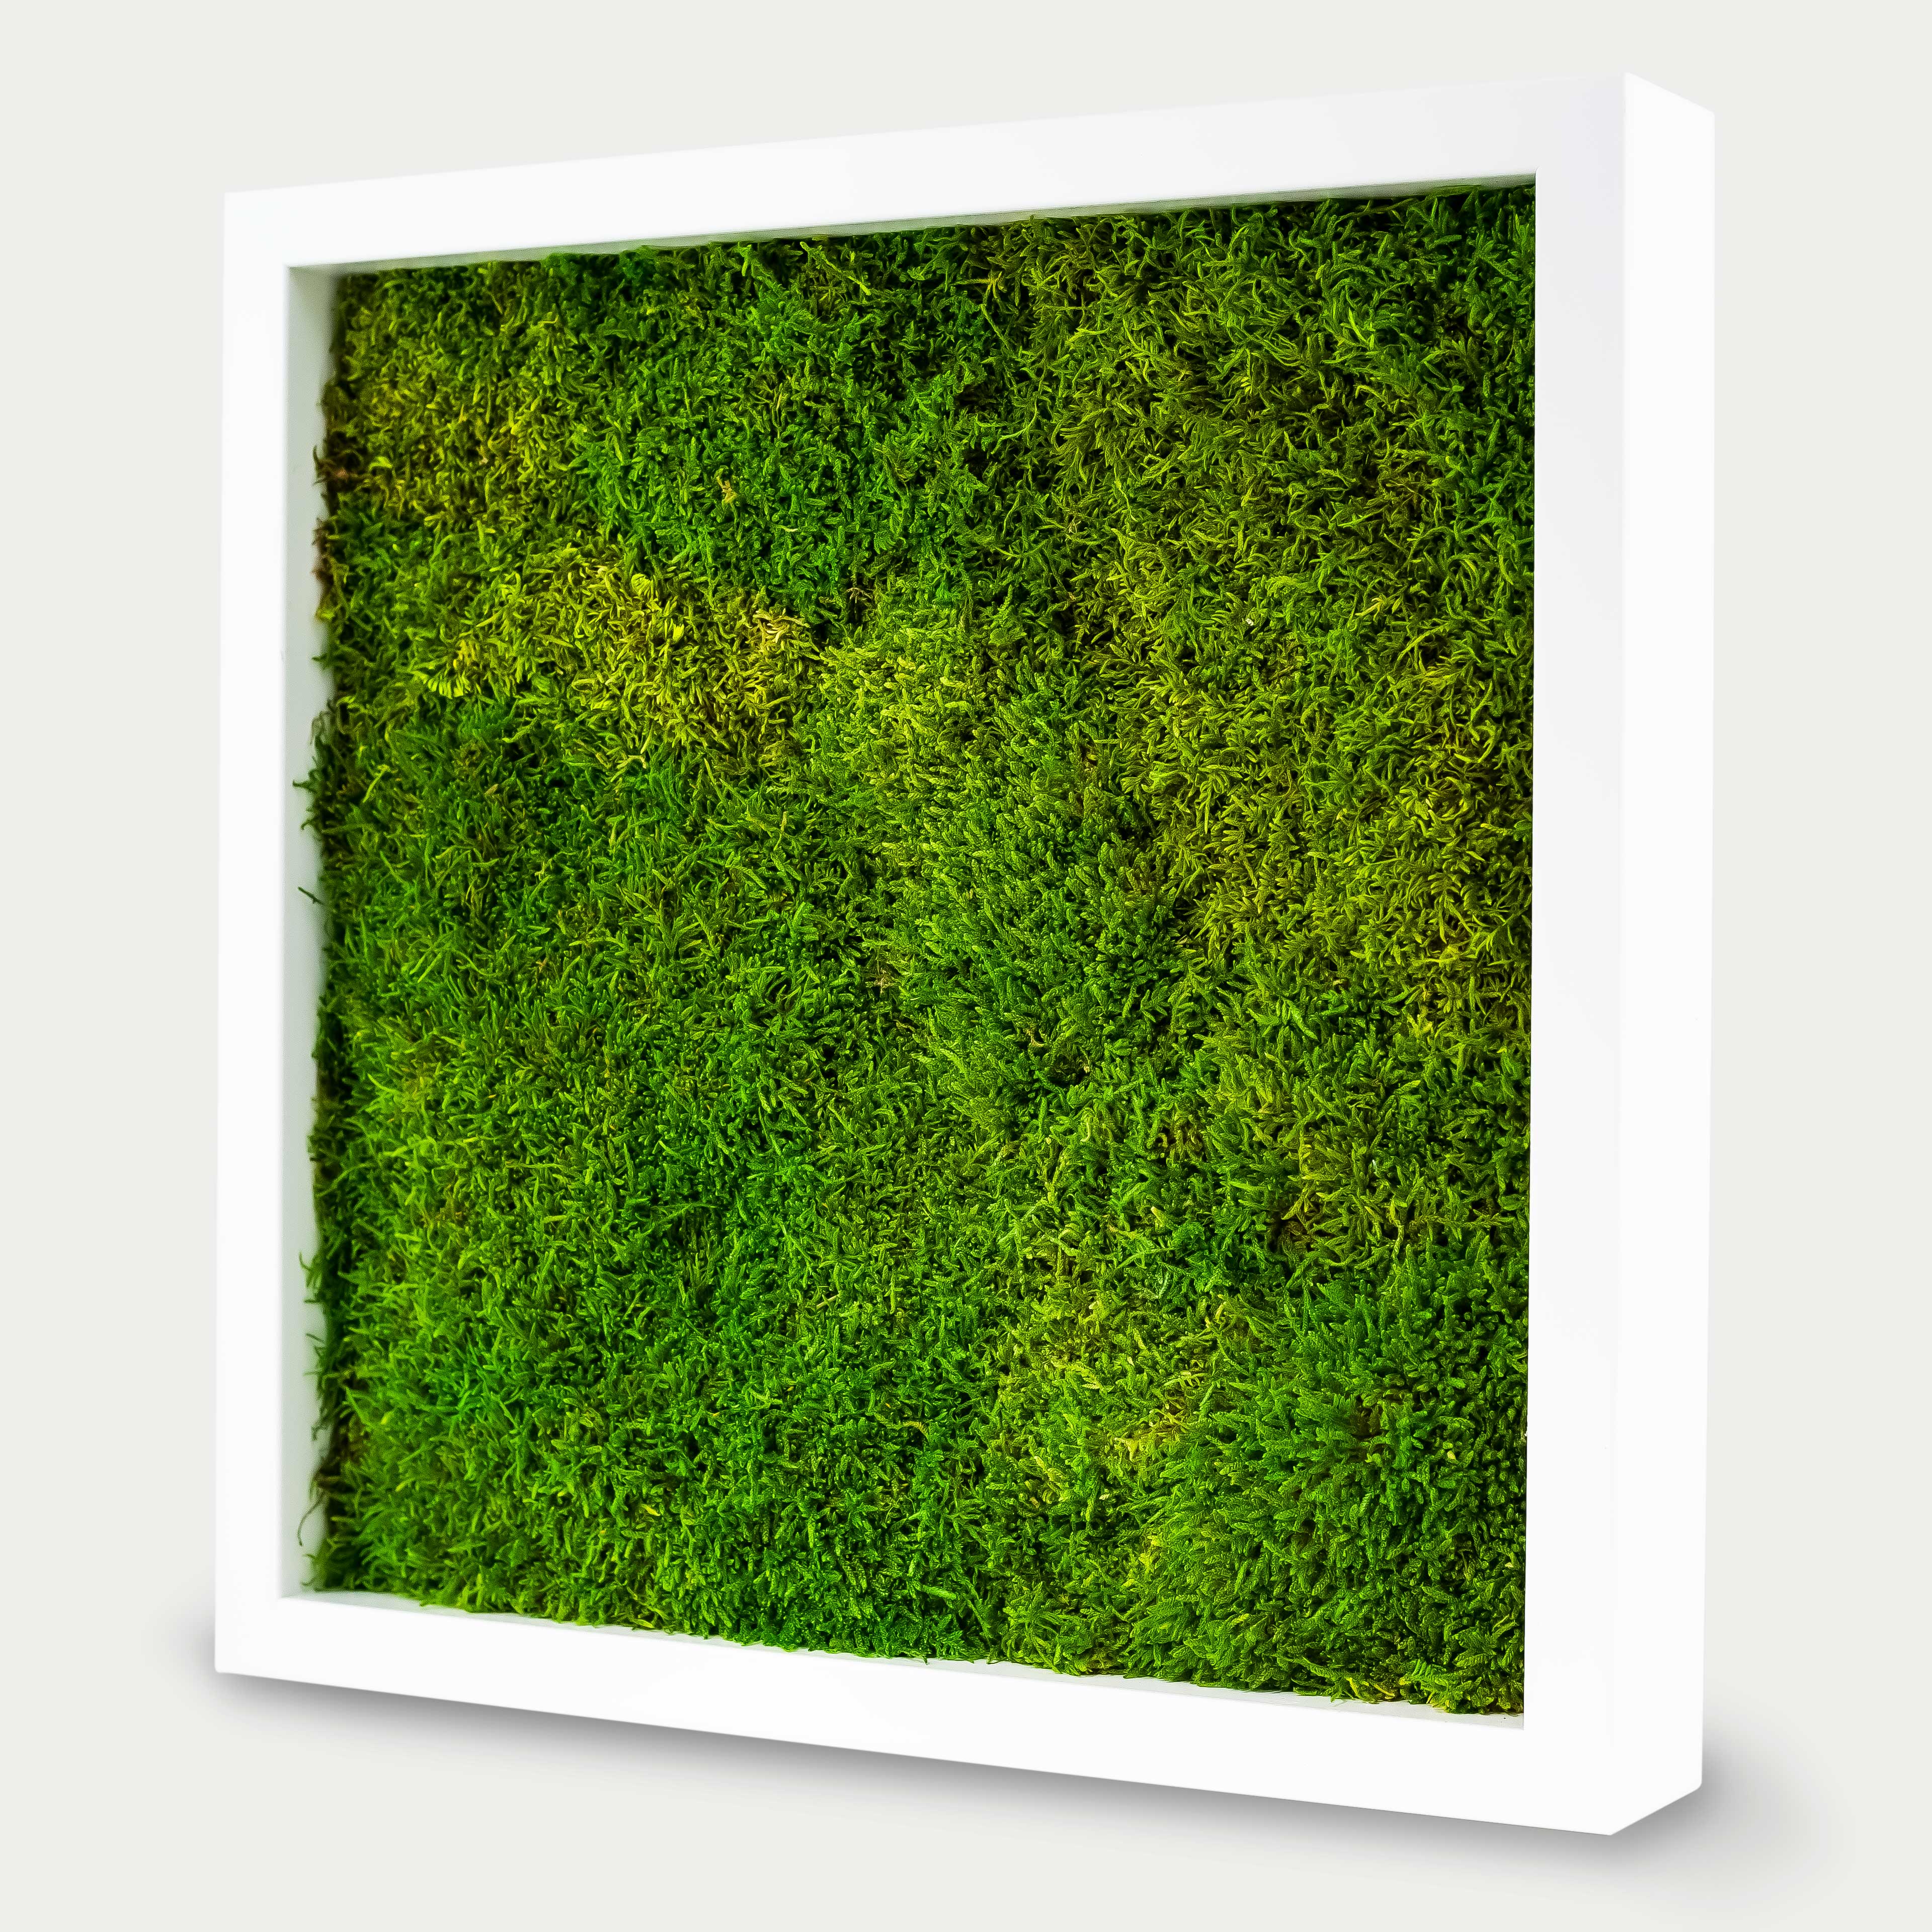 Quadratisches Flachmoosbild - 40 x 40 cm